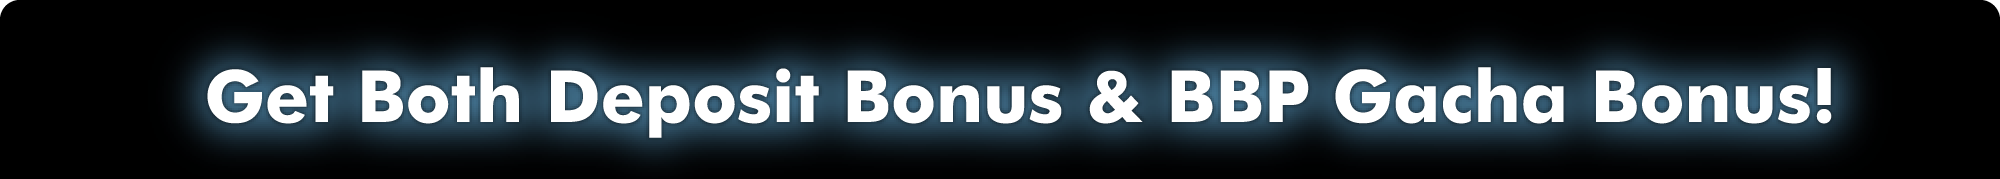 Get Both Deposit Bonus & BBP Gacha Bonus!